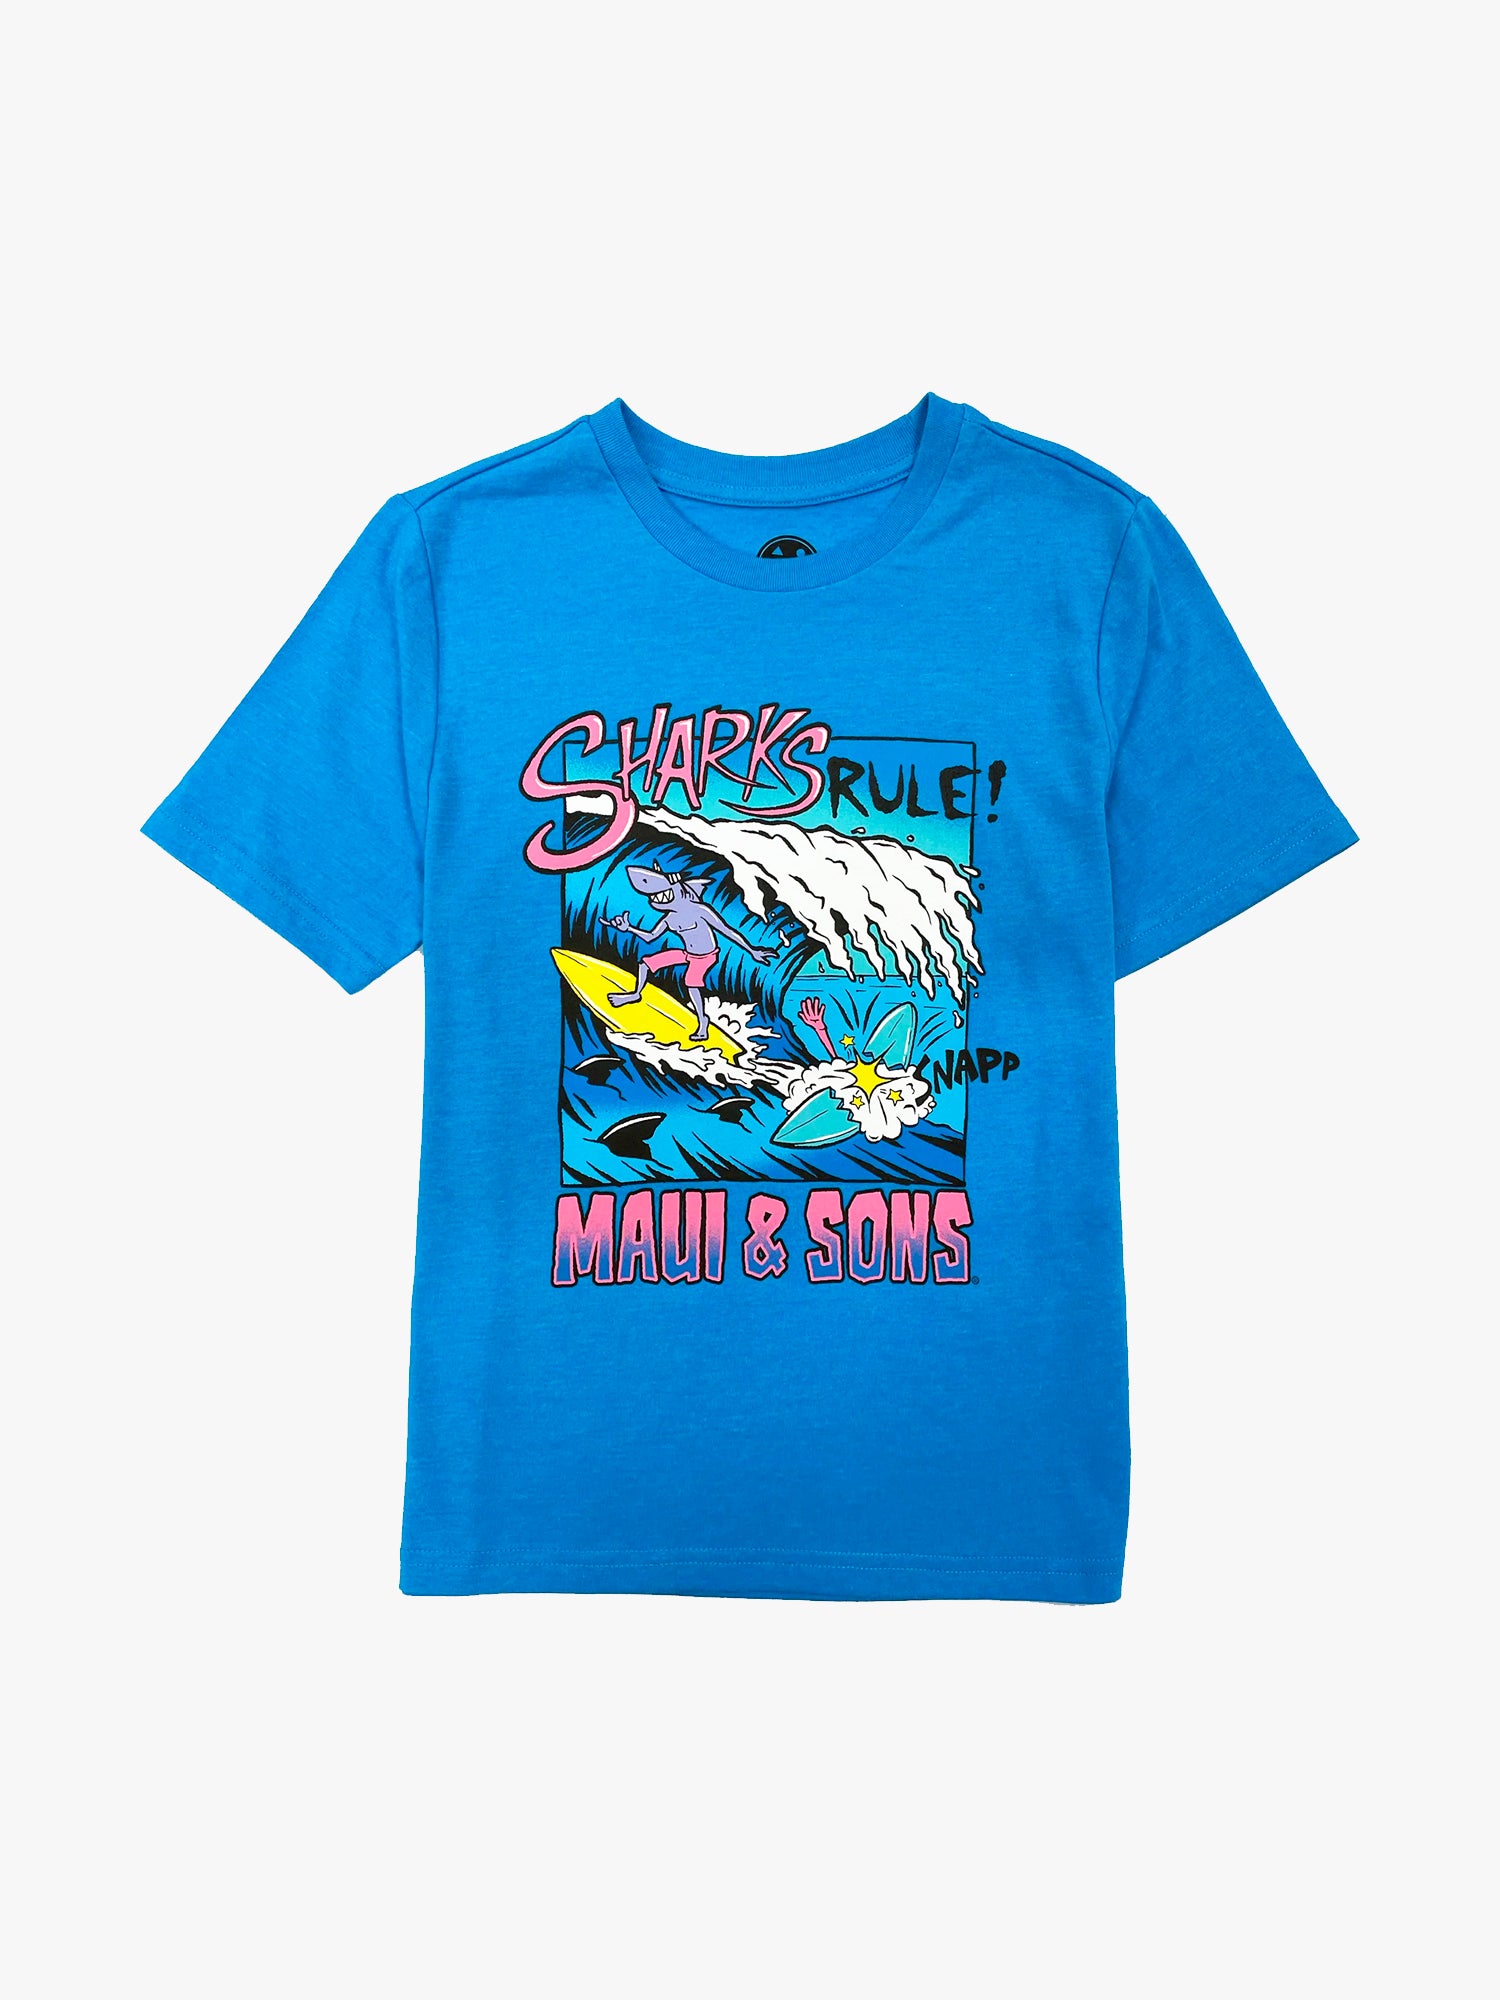 Sharks Rule Boy's T-Shirts